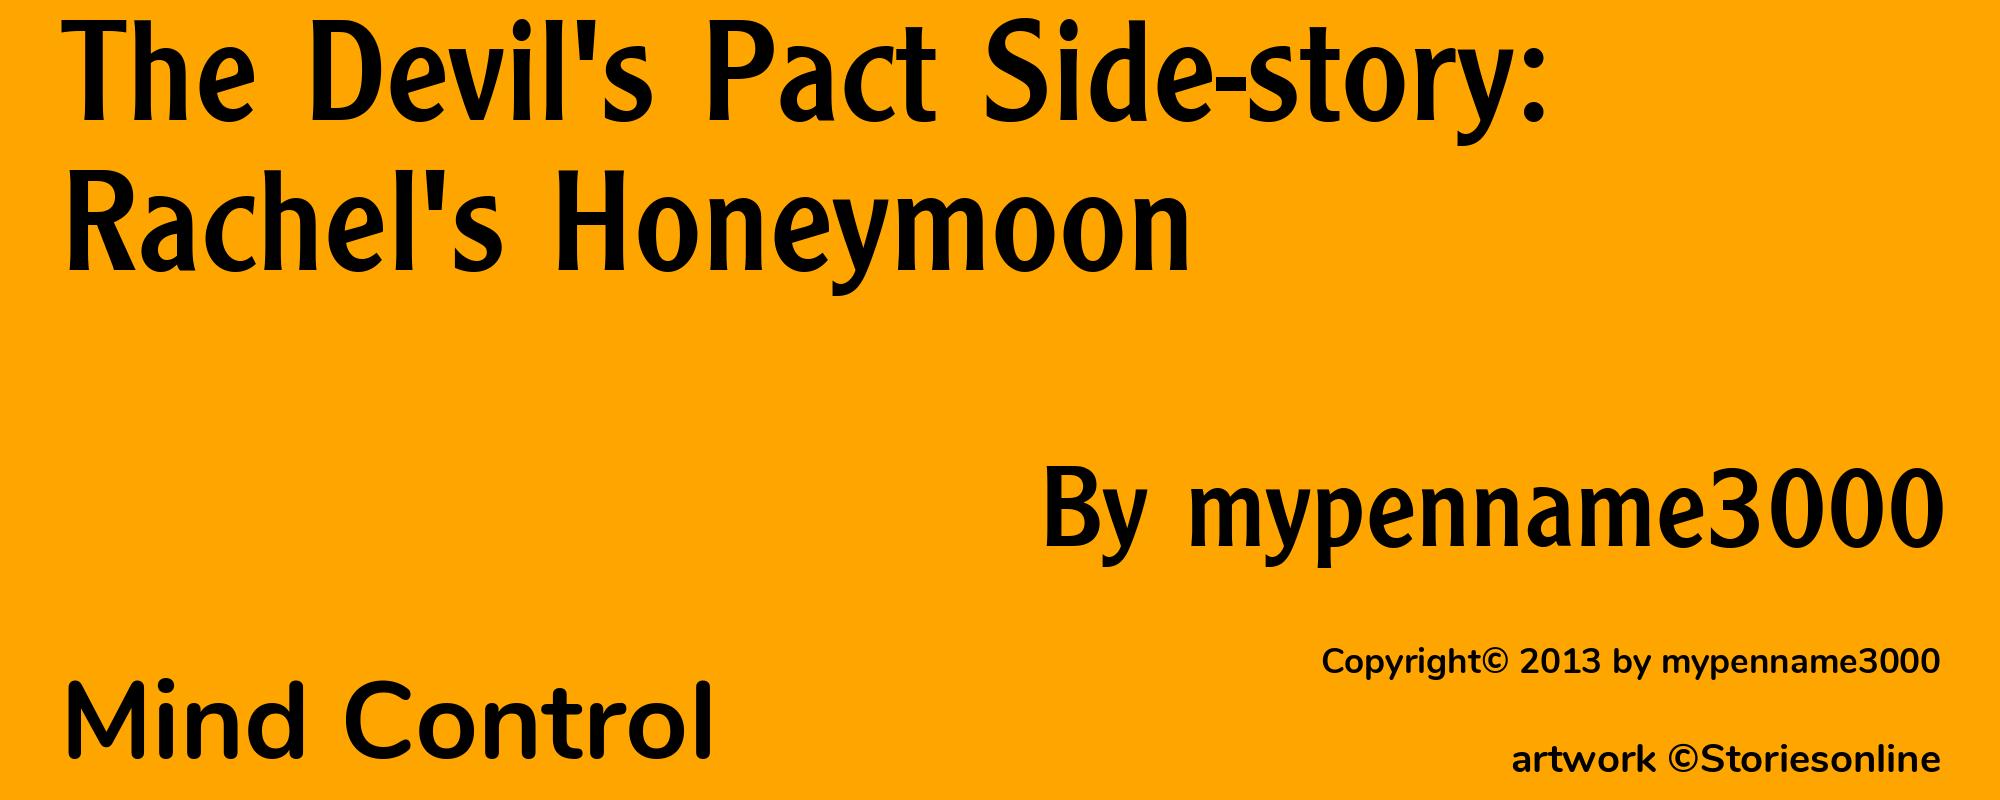 The Devil's Pact Side-story: Rachel's Honeymoon - Cover